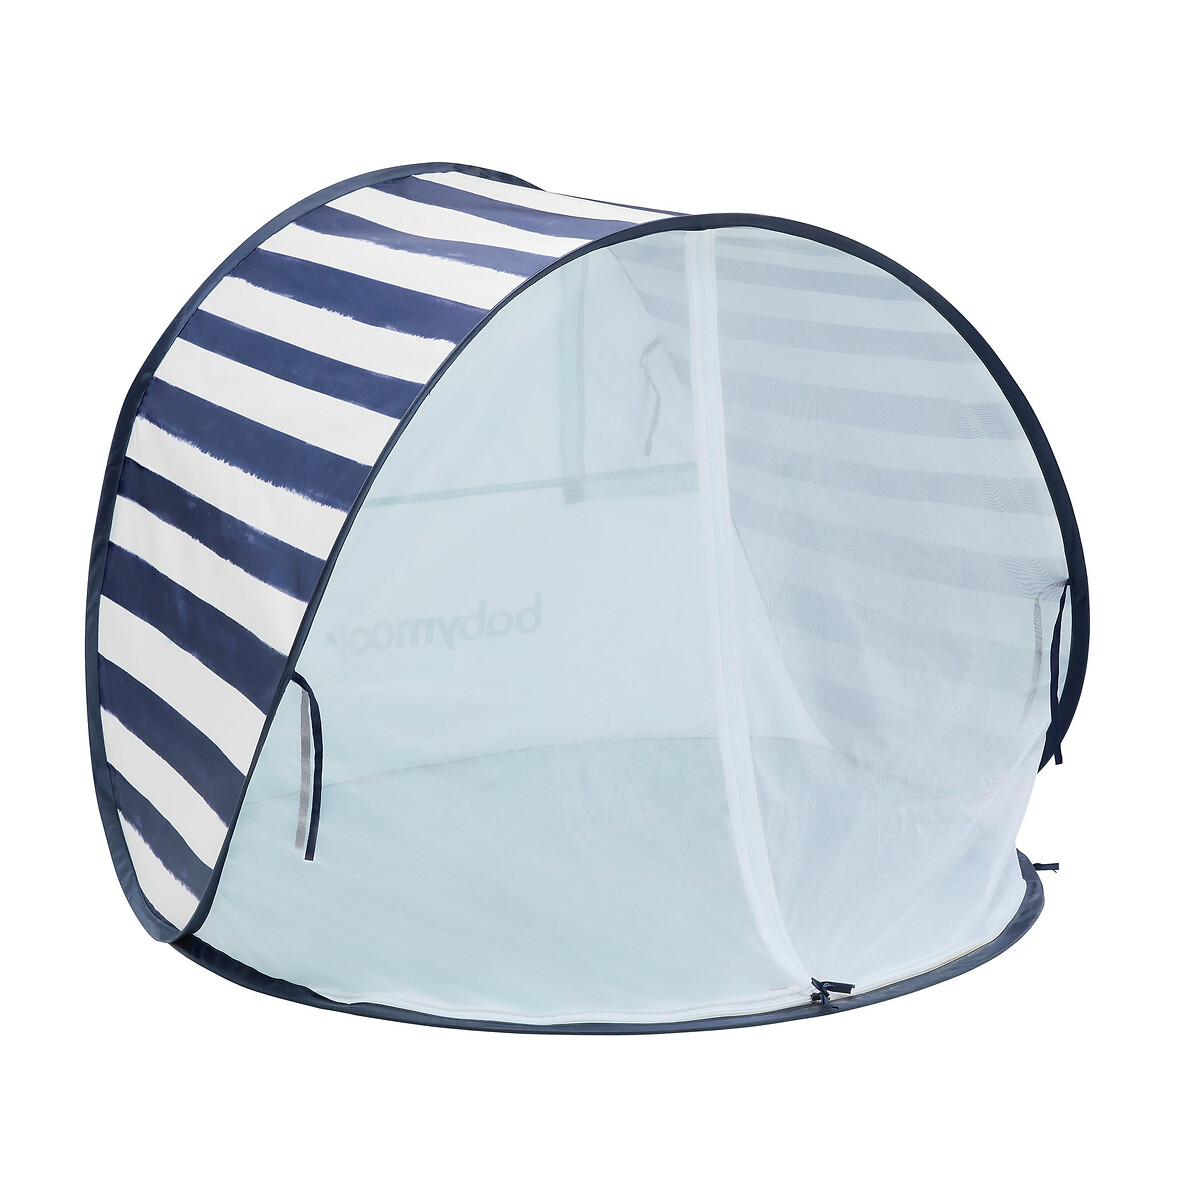 High Protection 50 SPF UV Protection Tent